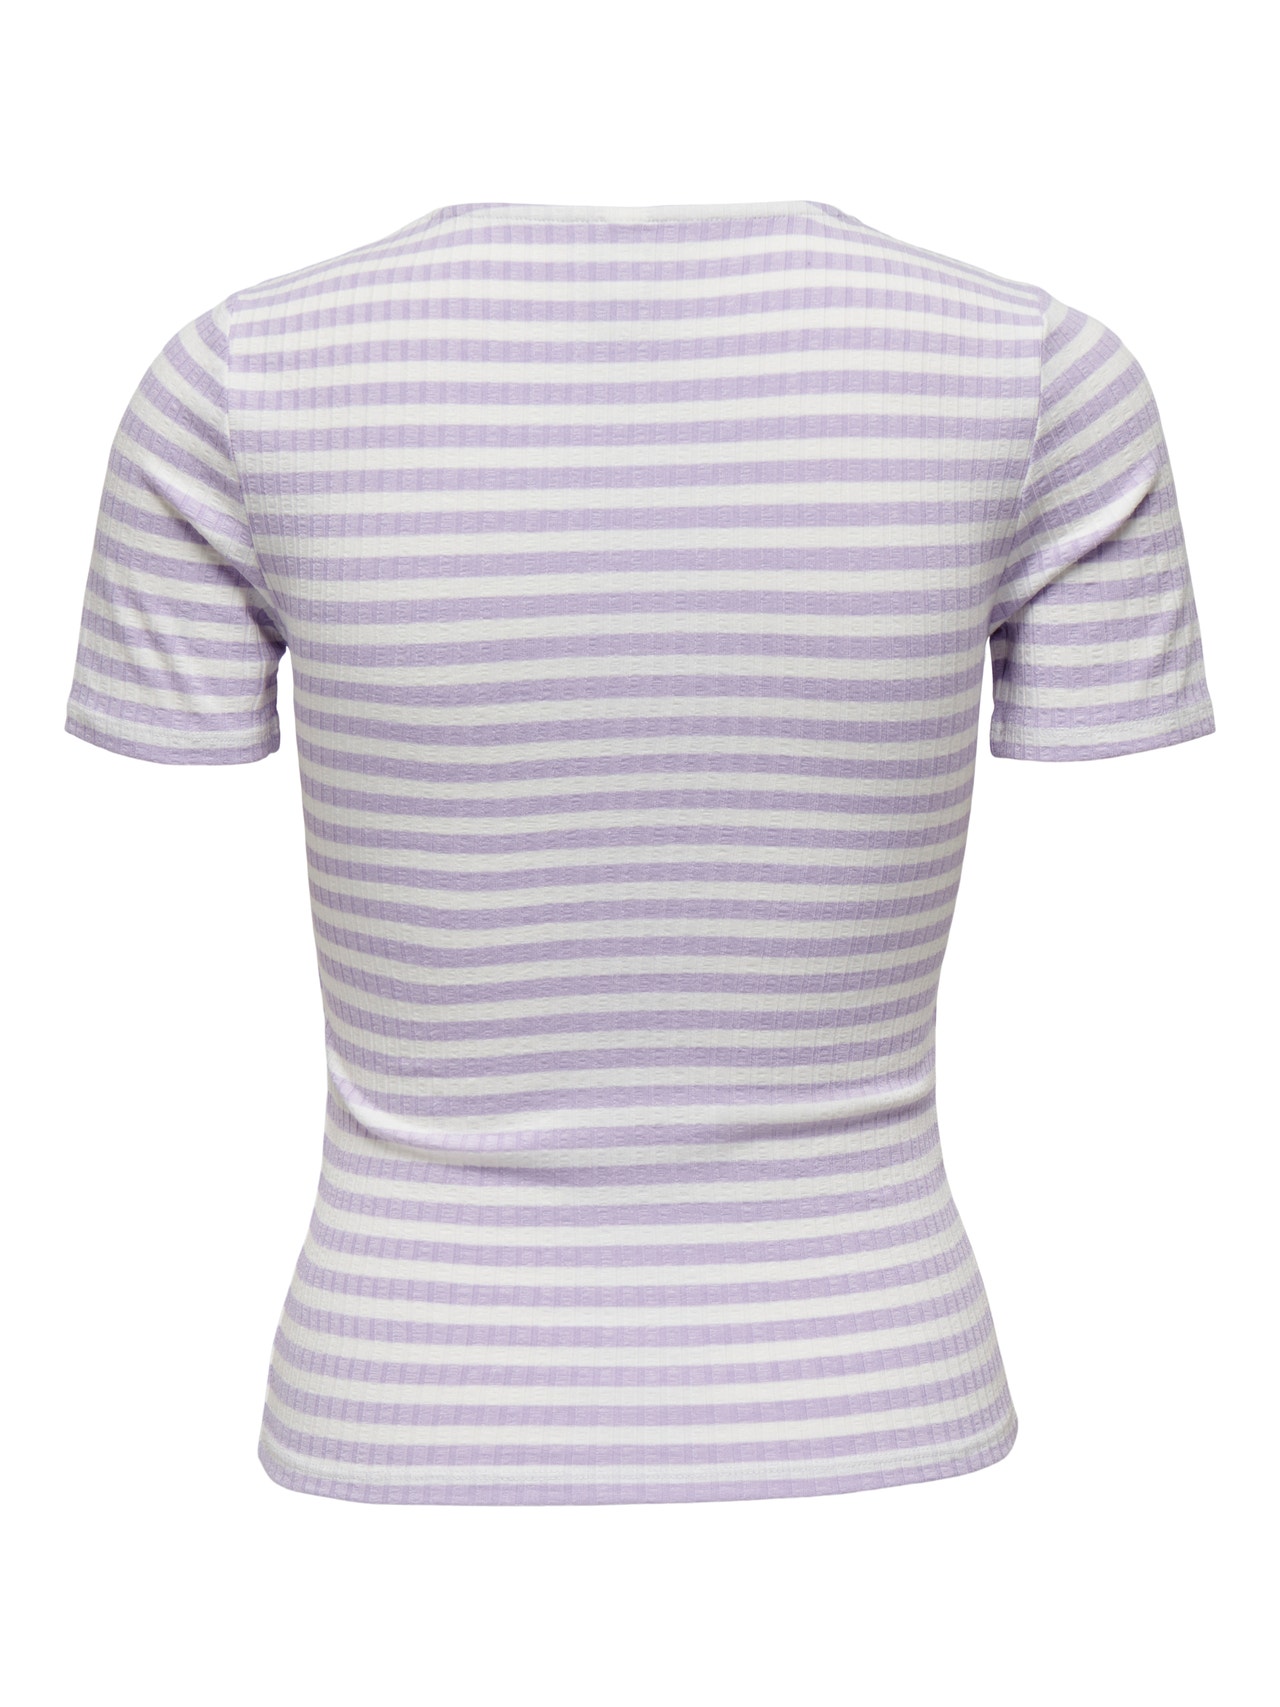 ONLY Striped V-Neck Top -Lavender Frost - 15253481